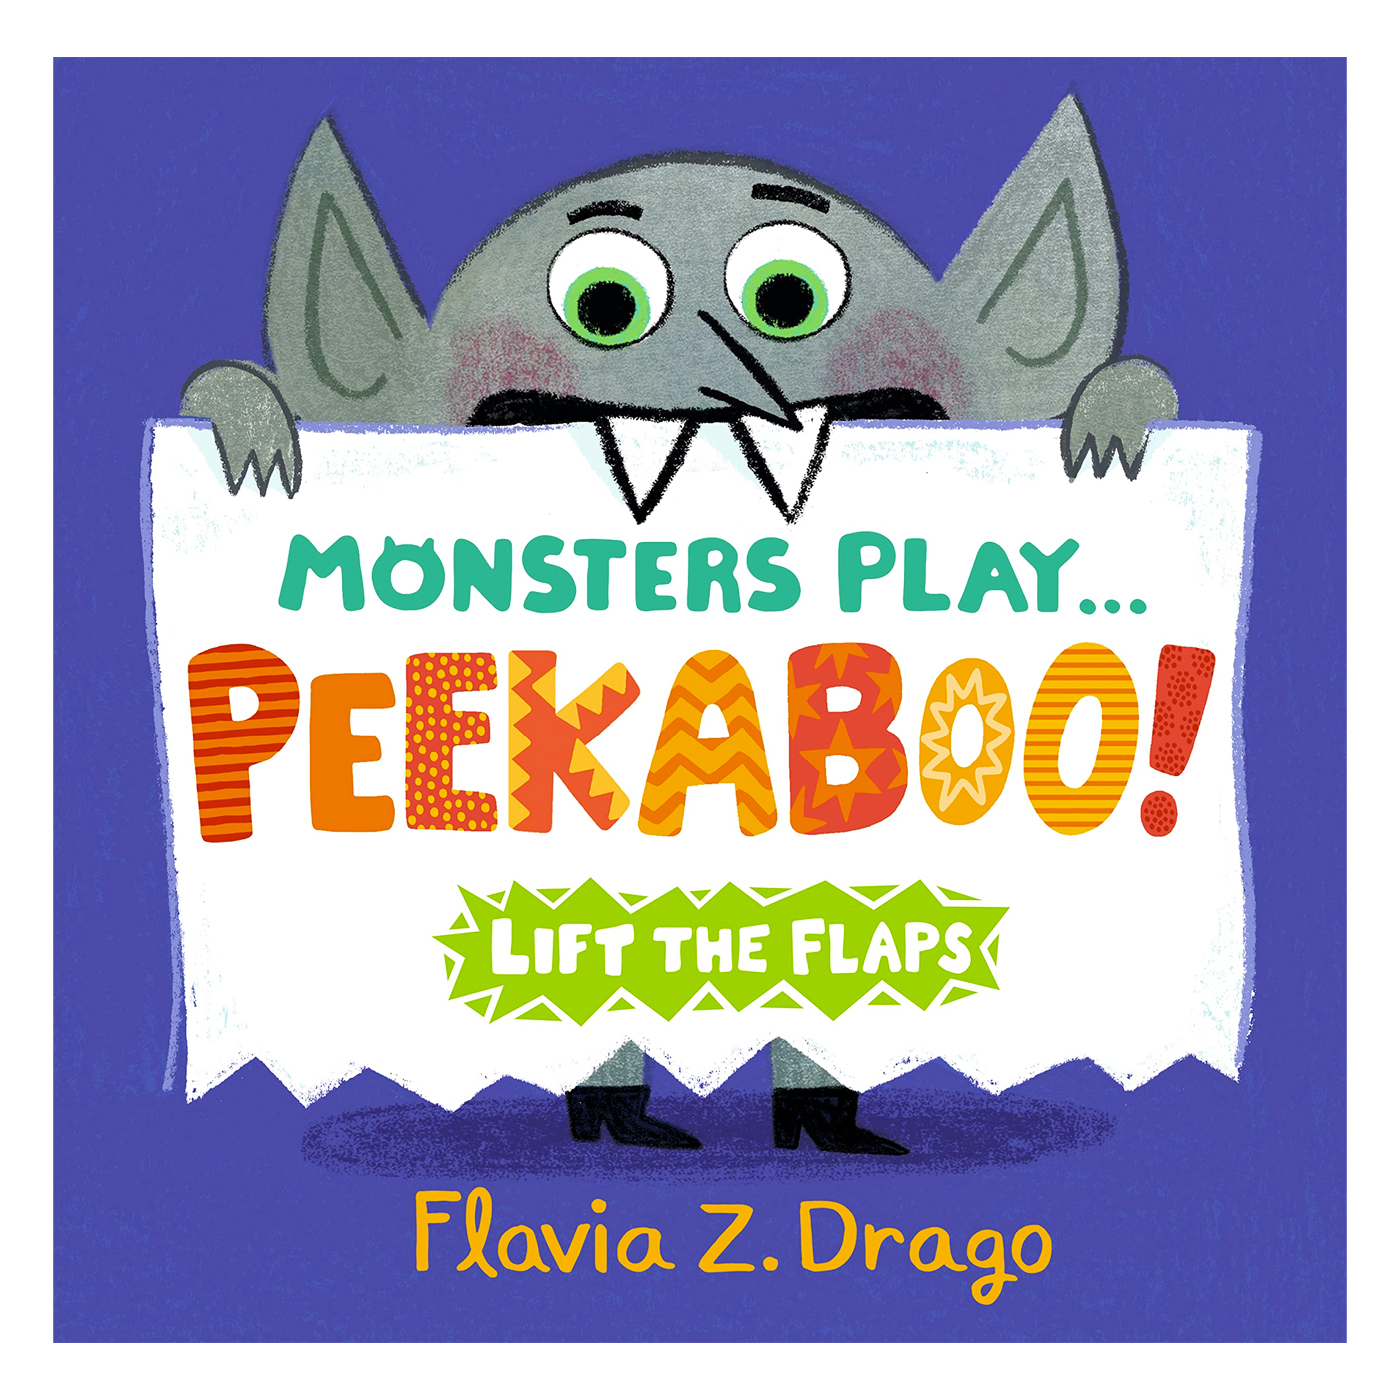 WALKER BOOKS Monsters Play... Peek-A- Boo!